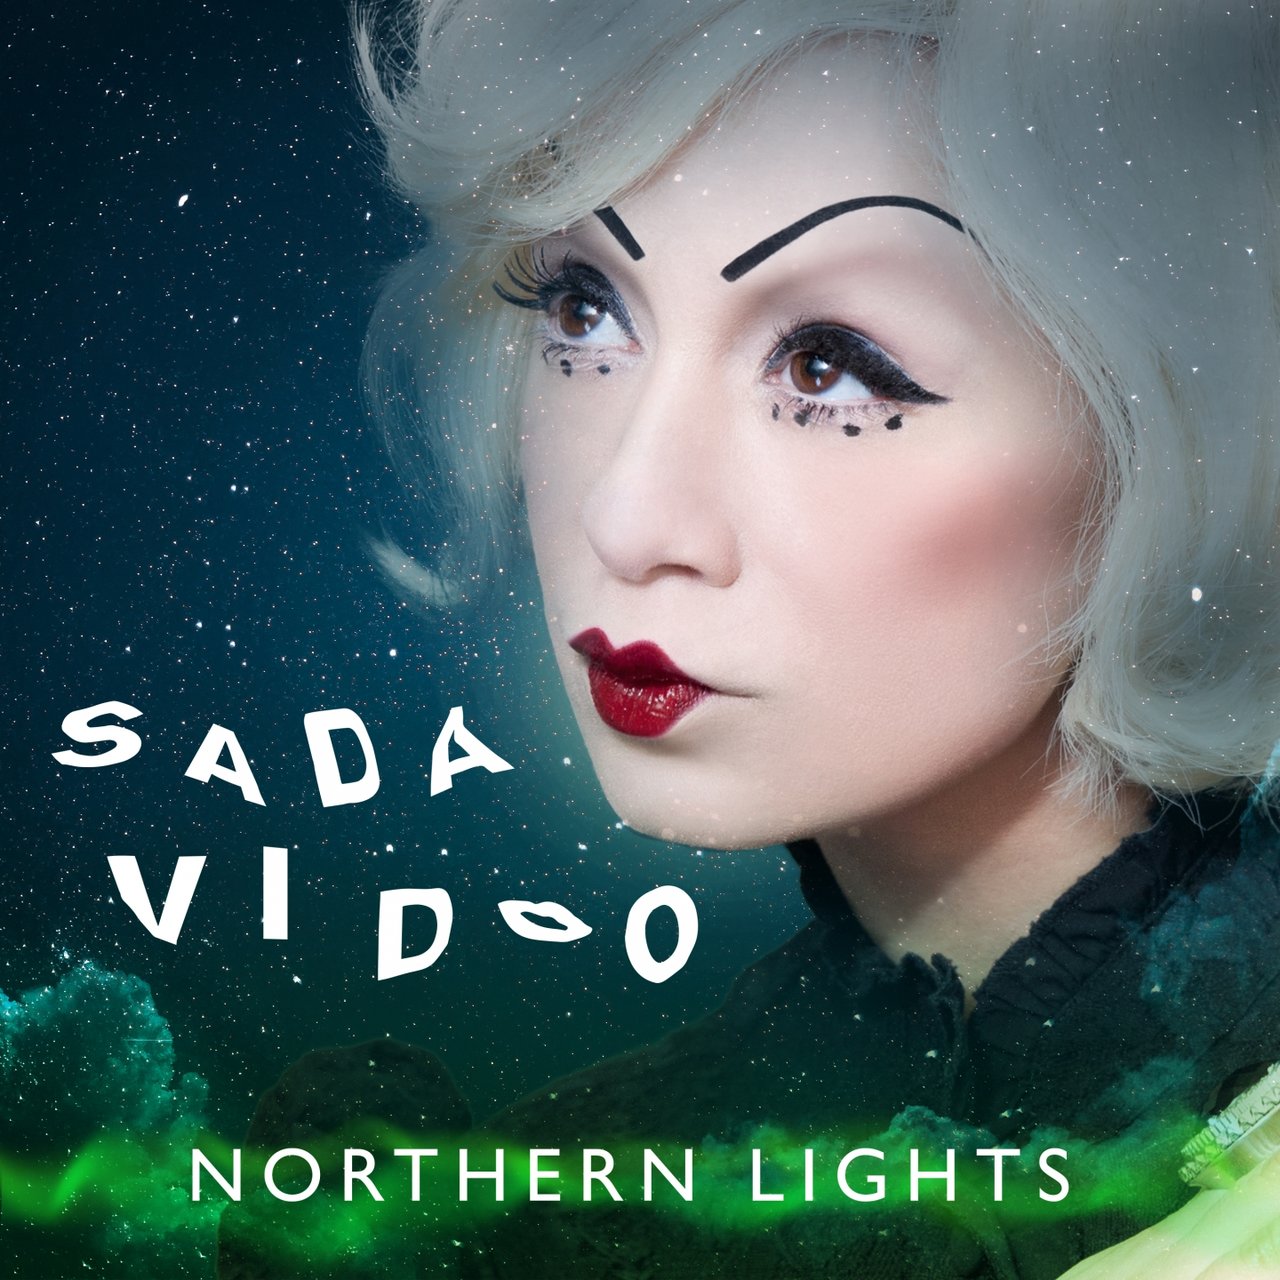 Sada Vidoo — Northern Lights cover artwork